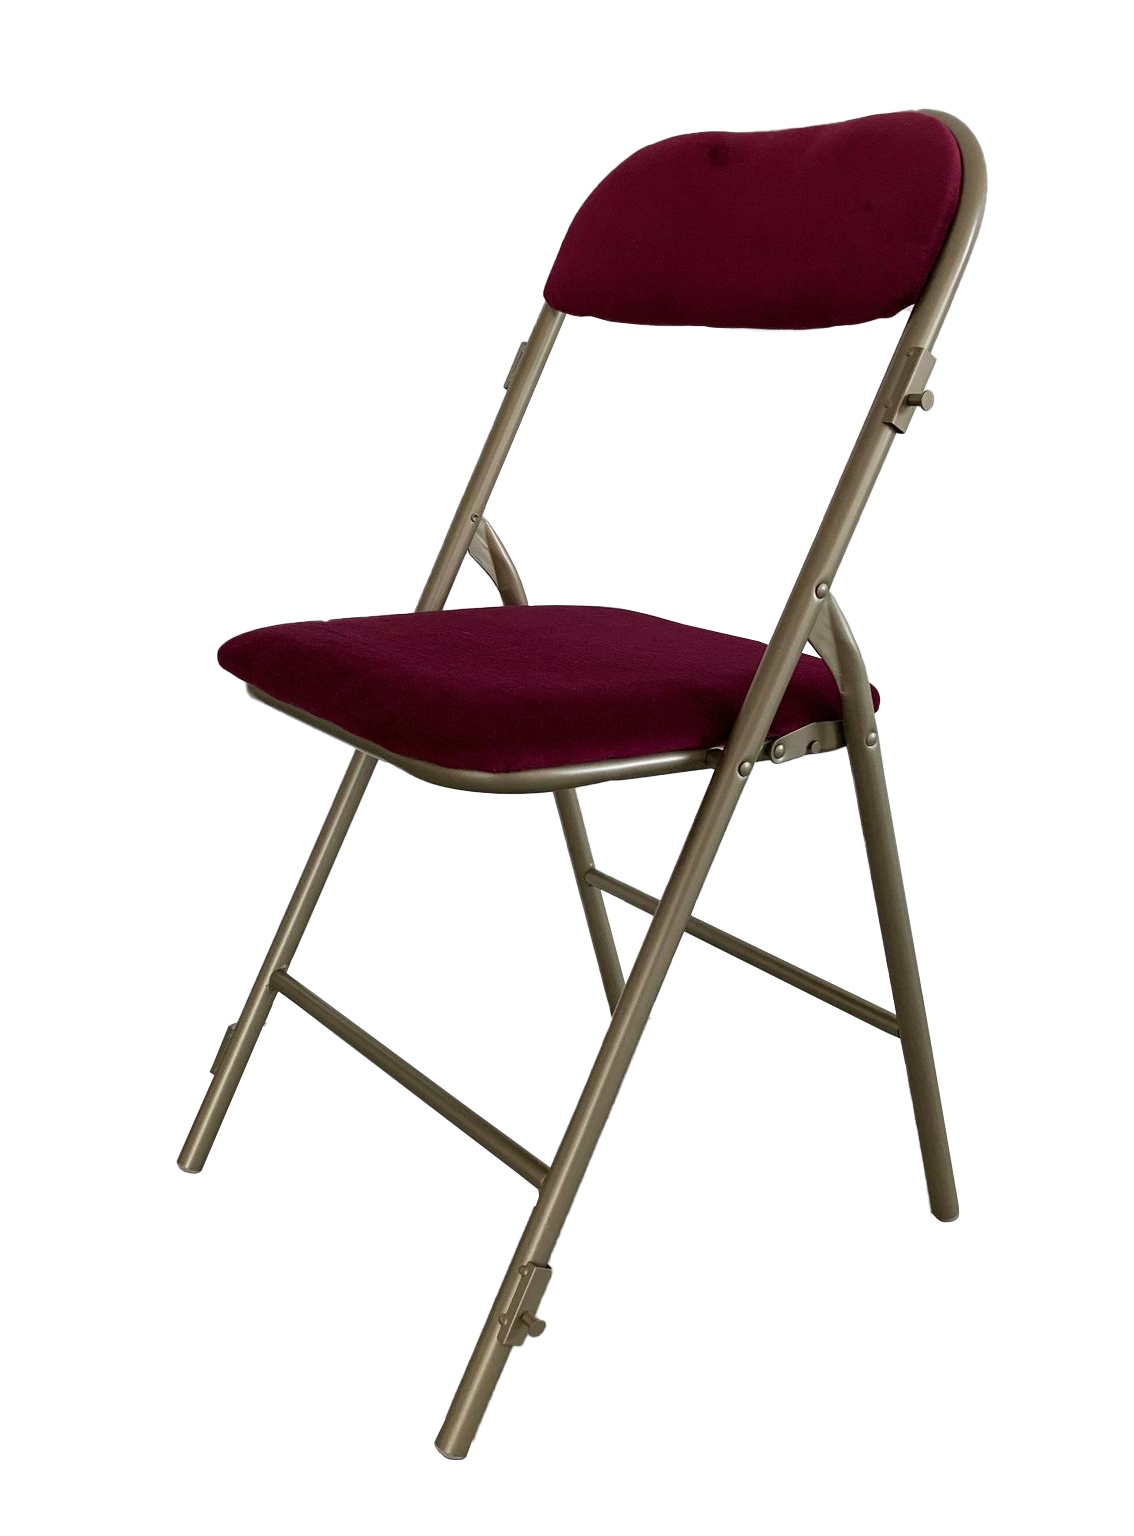 Prestige chair